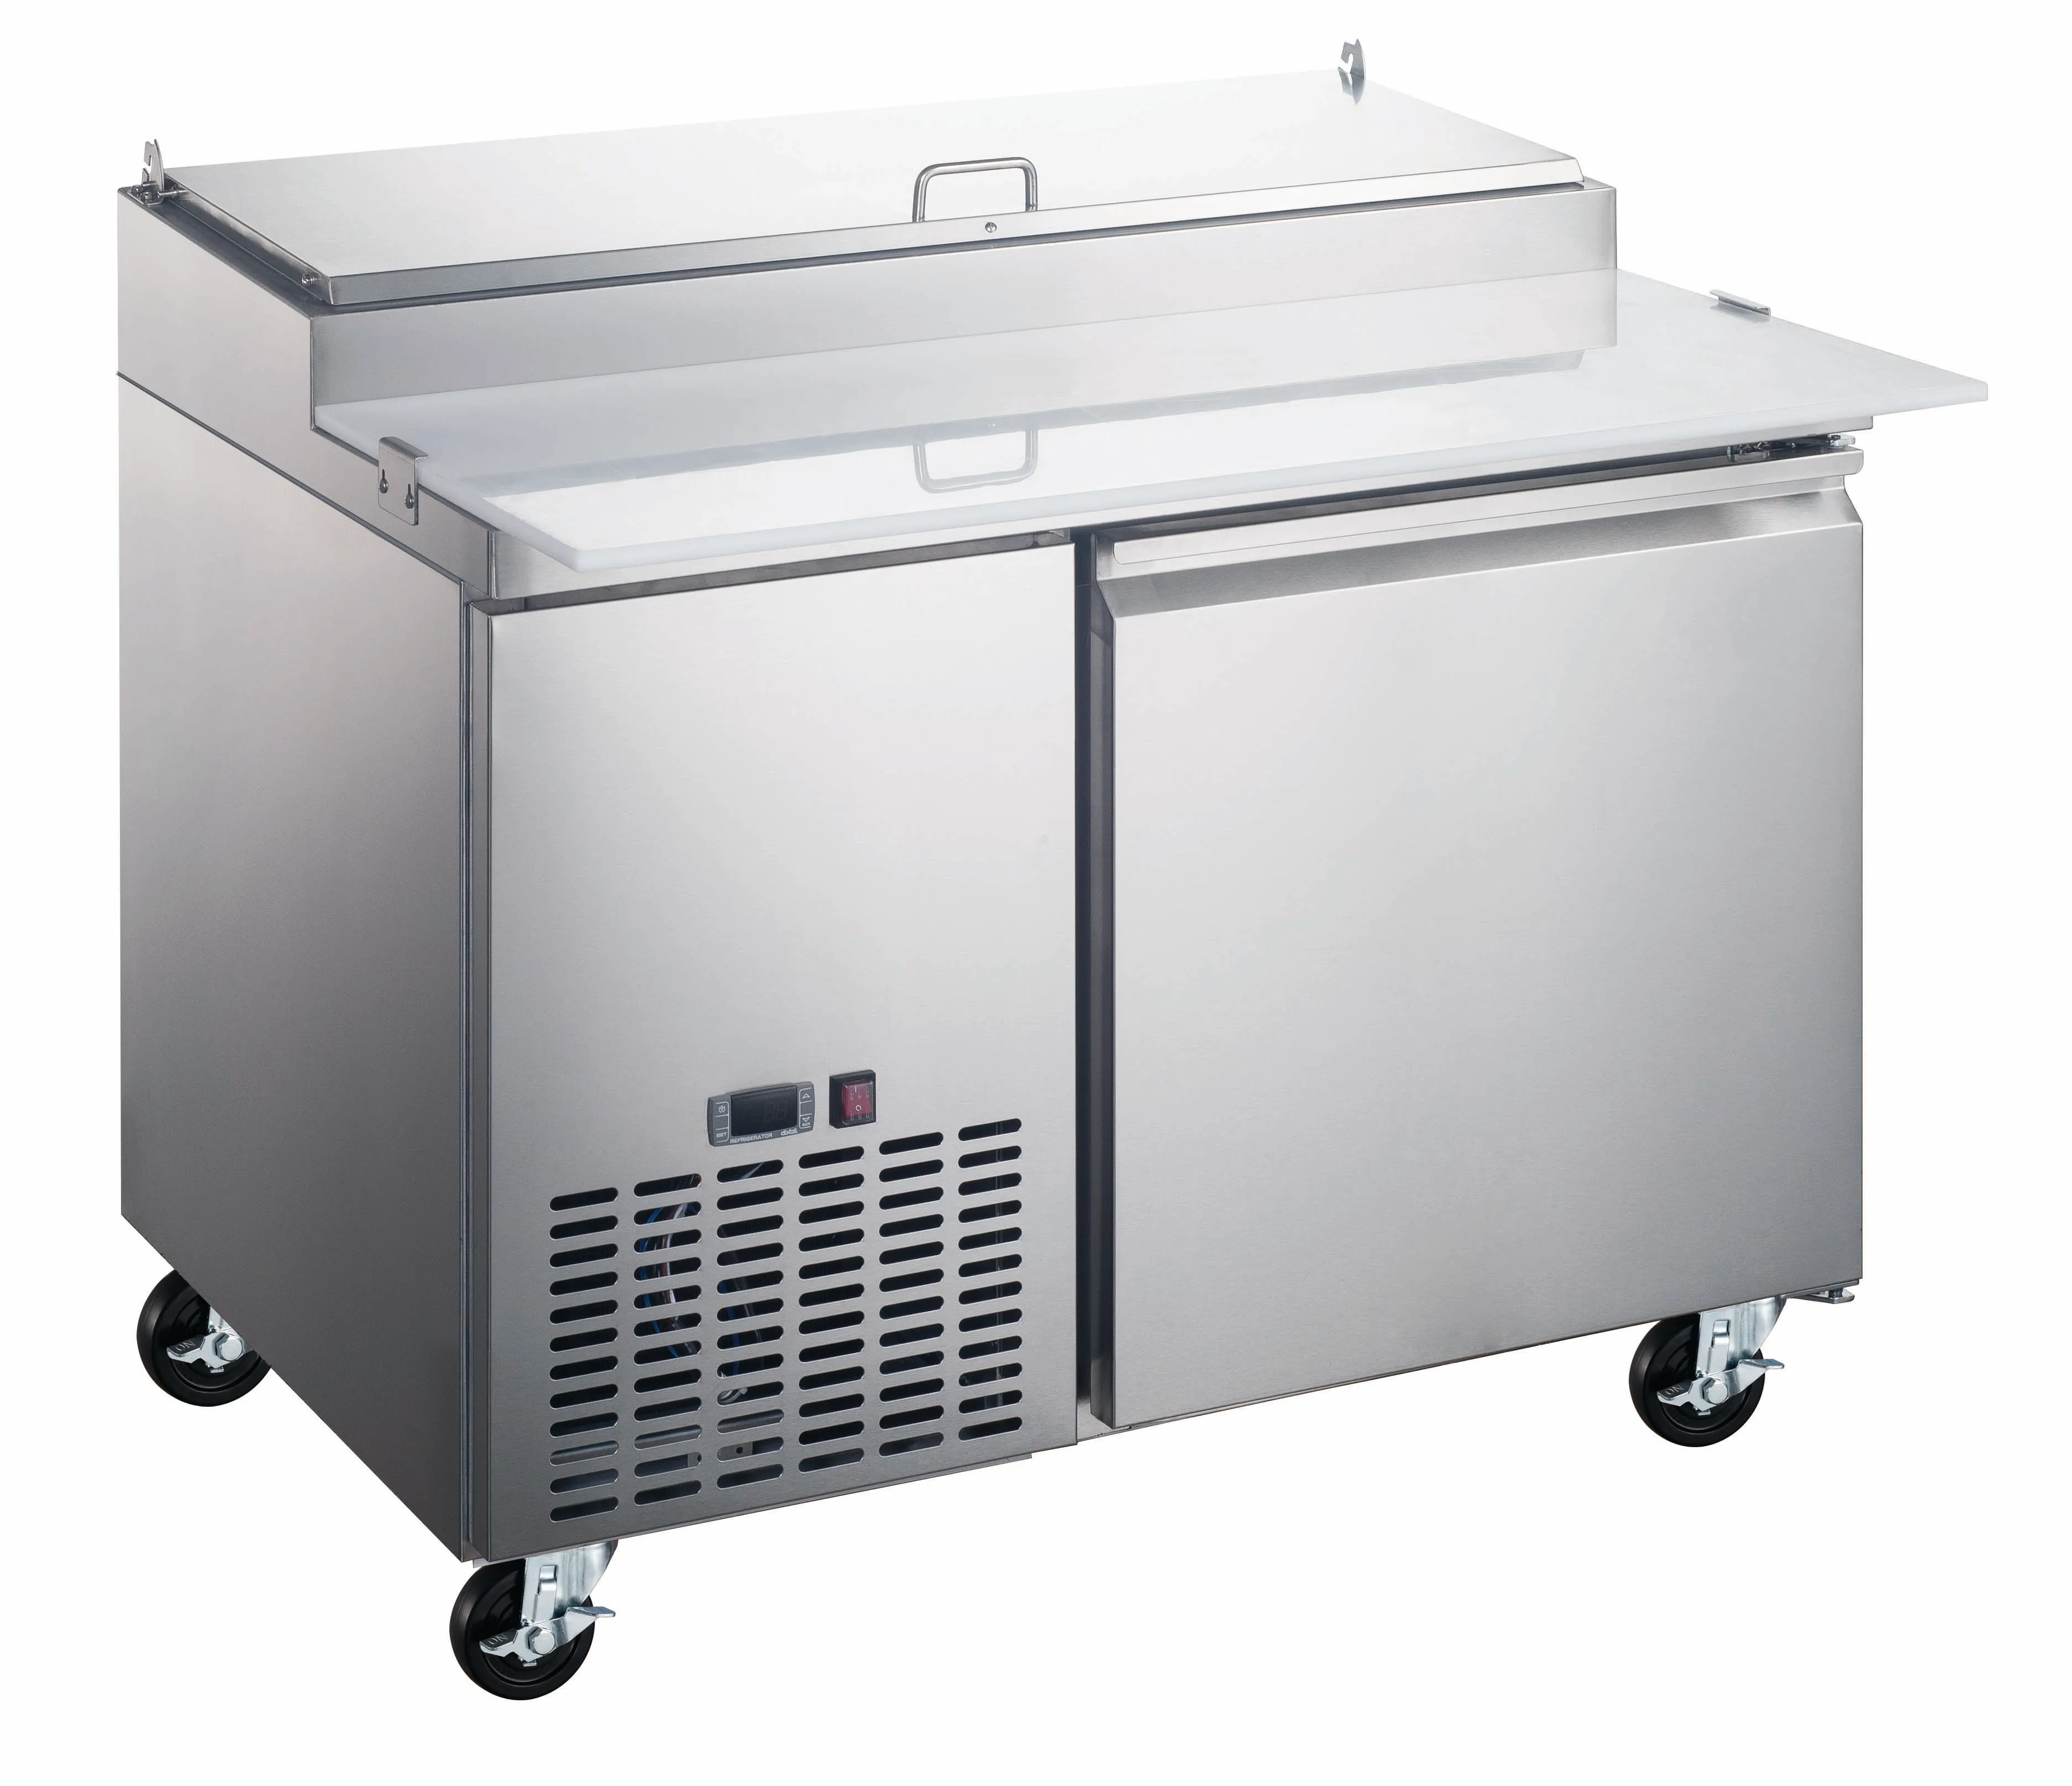 Refrigerator for Prep. Table, UHC-51 холодильник